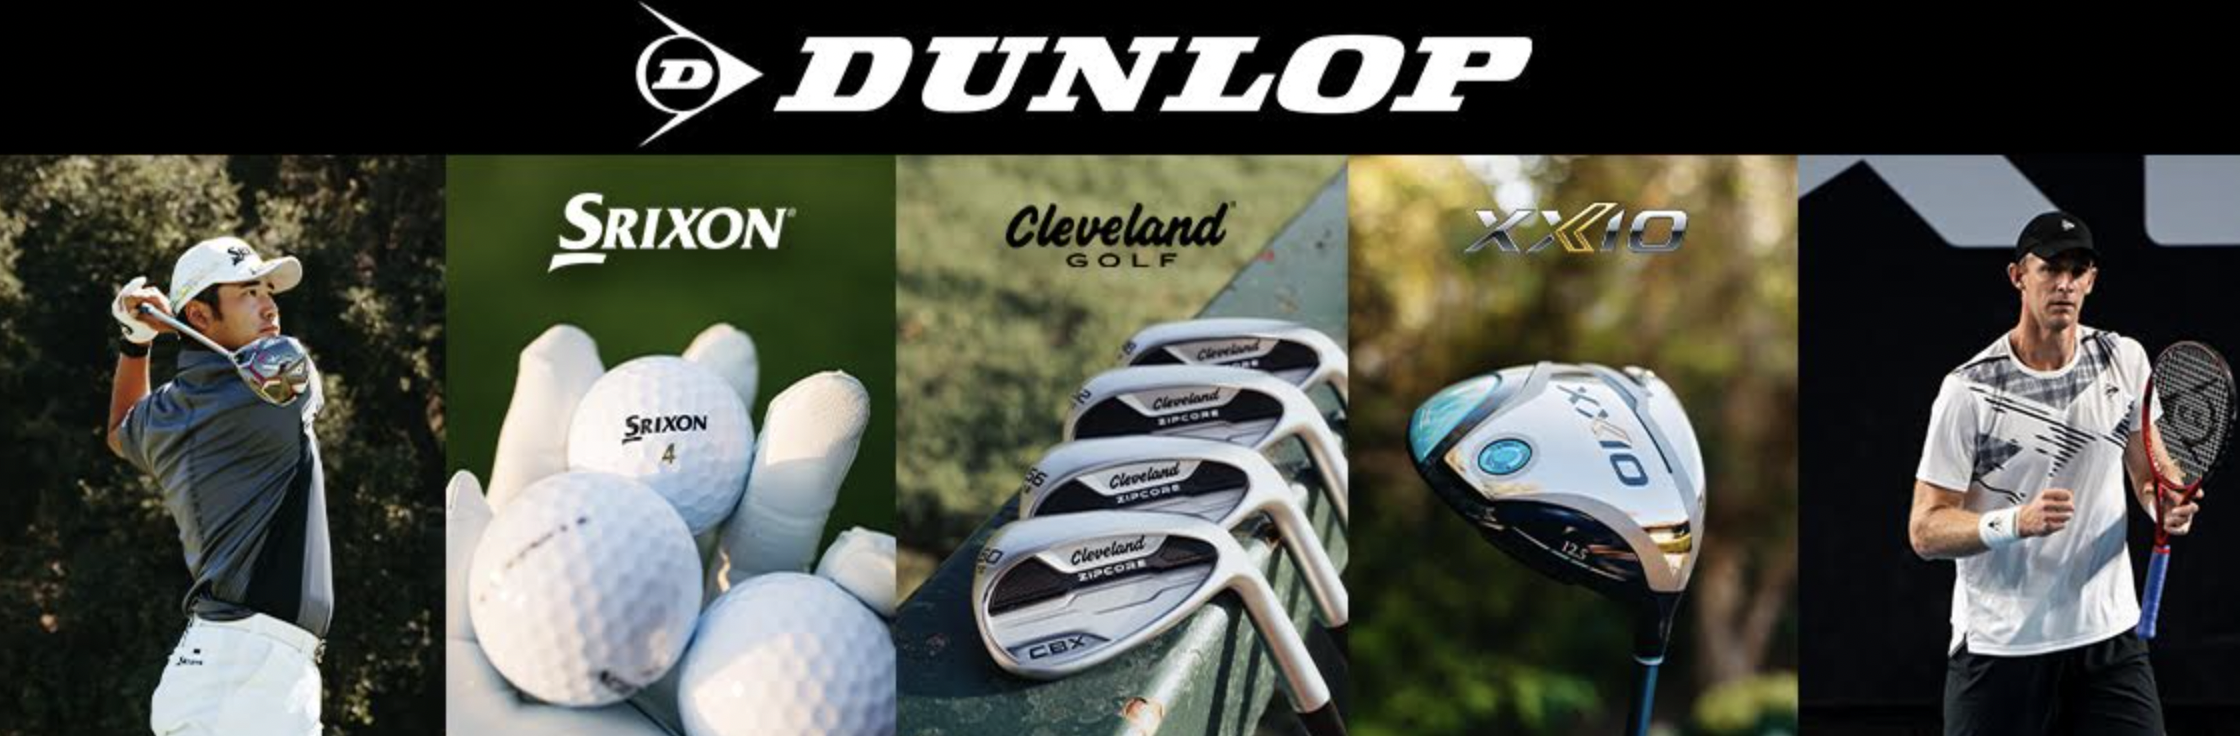 Golf/XXIO affiliated under 'Dunlop Sports Americas' in strategic GolfWRX